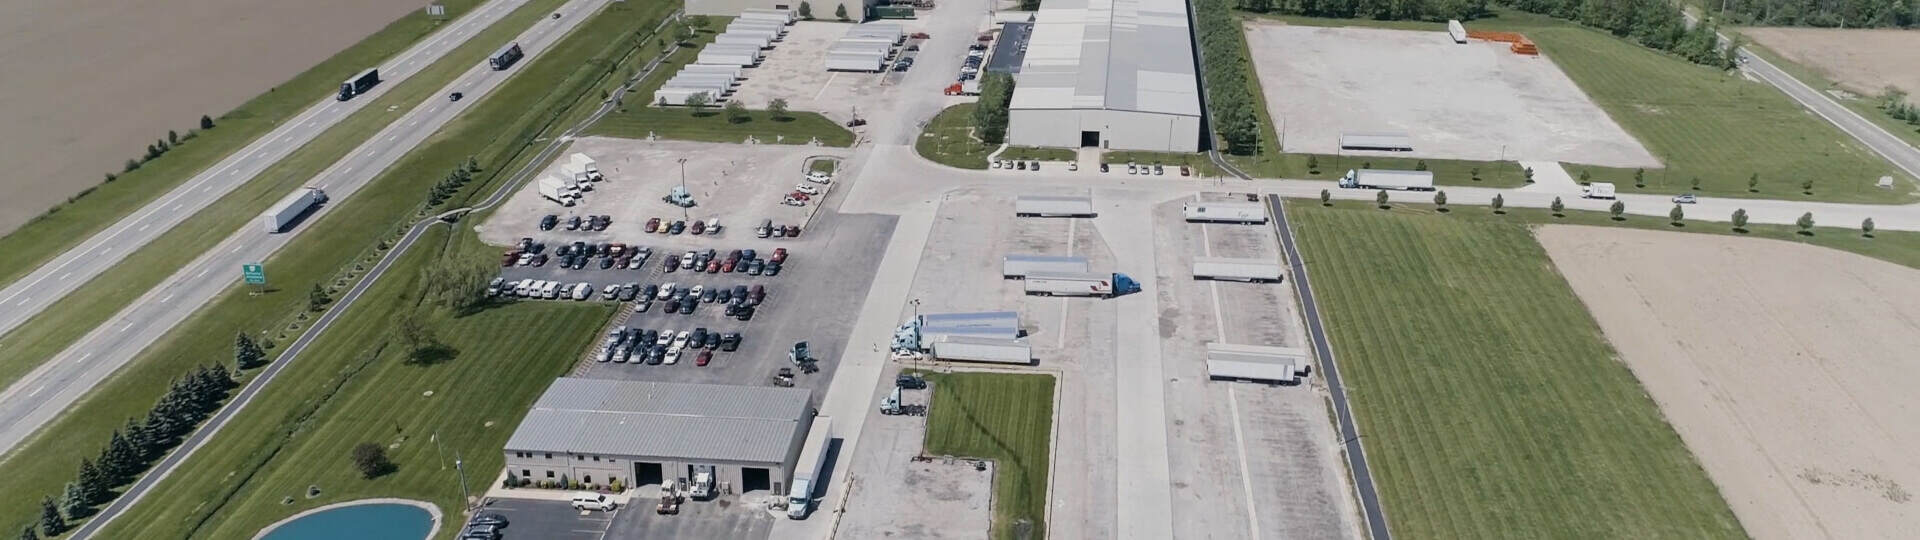 Aerial image of Keller Logistics Group complex in Defiance, Ohio 